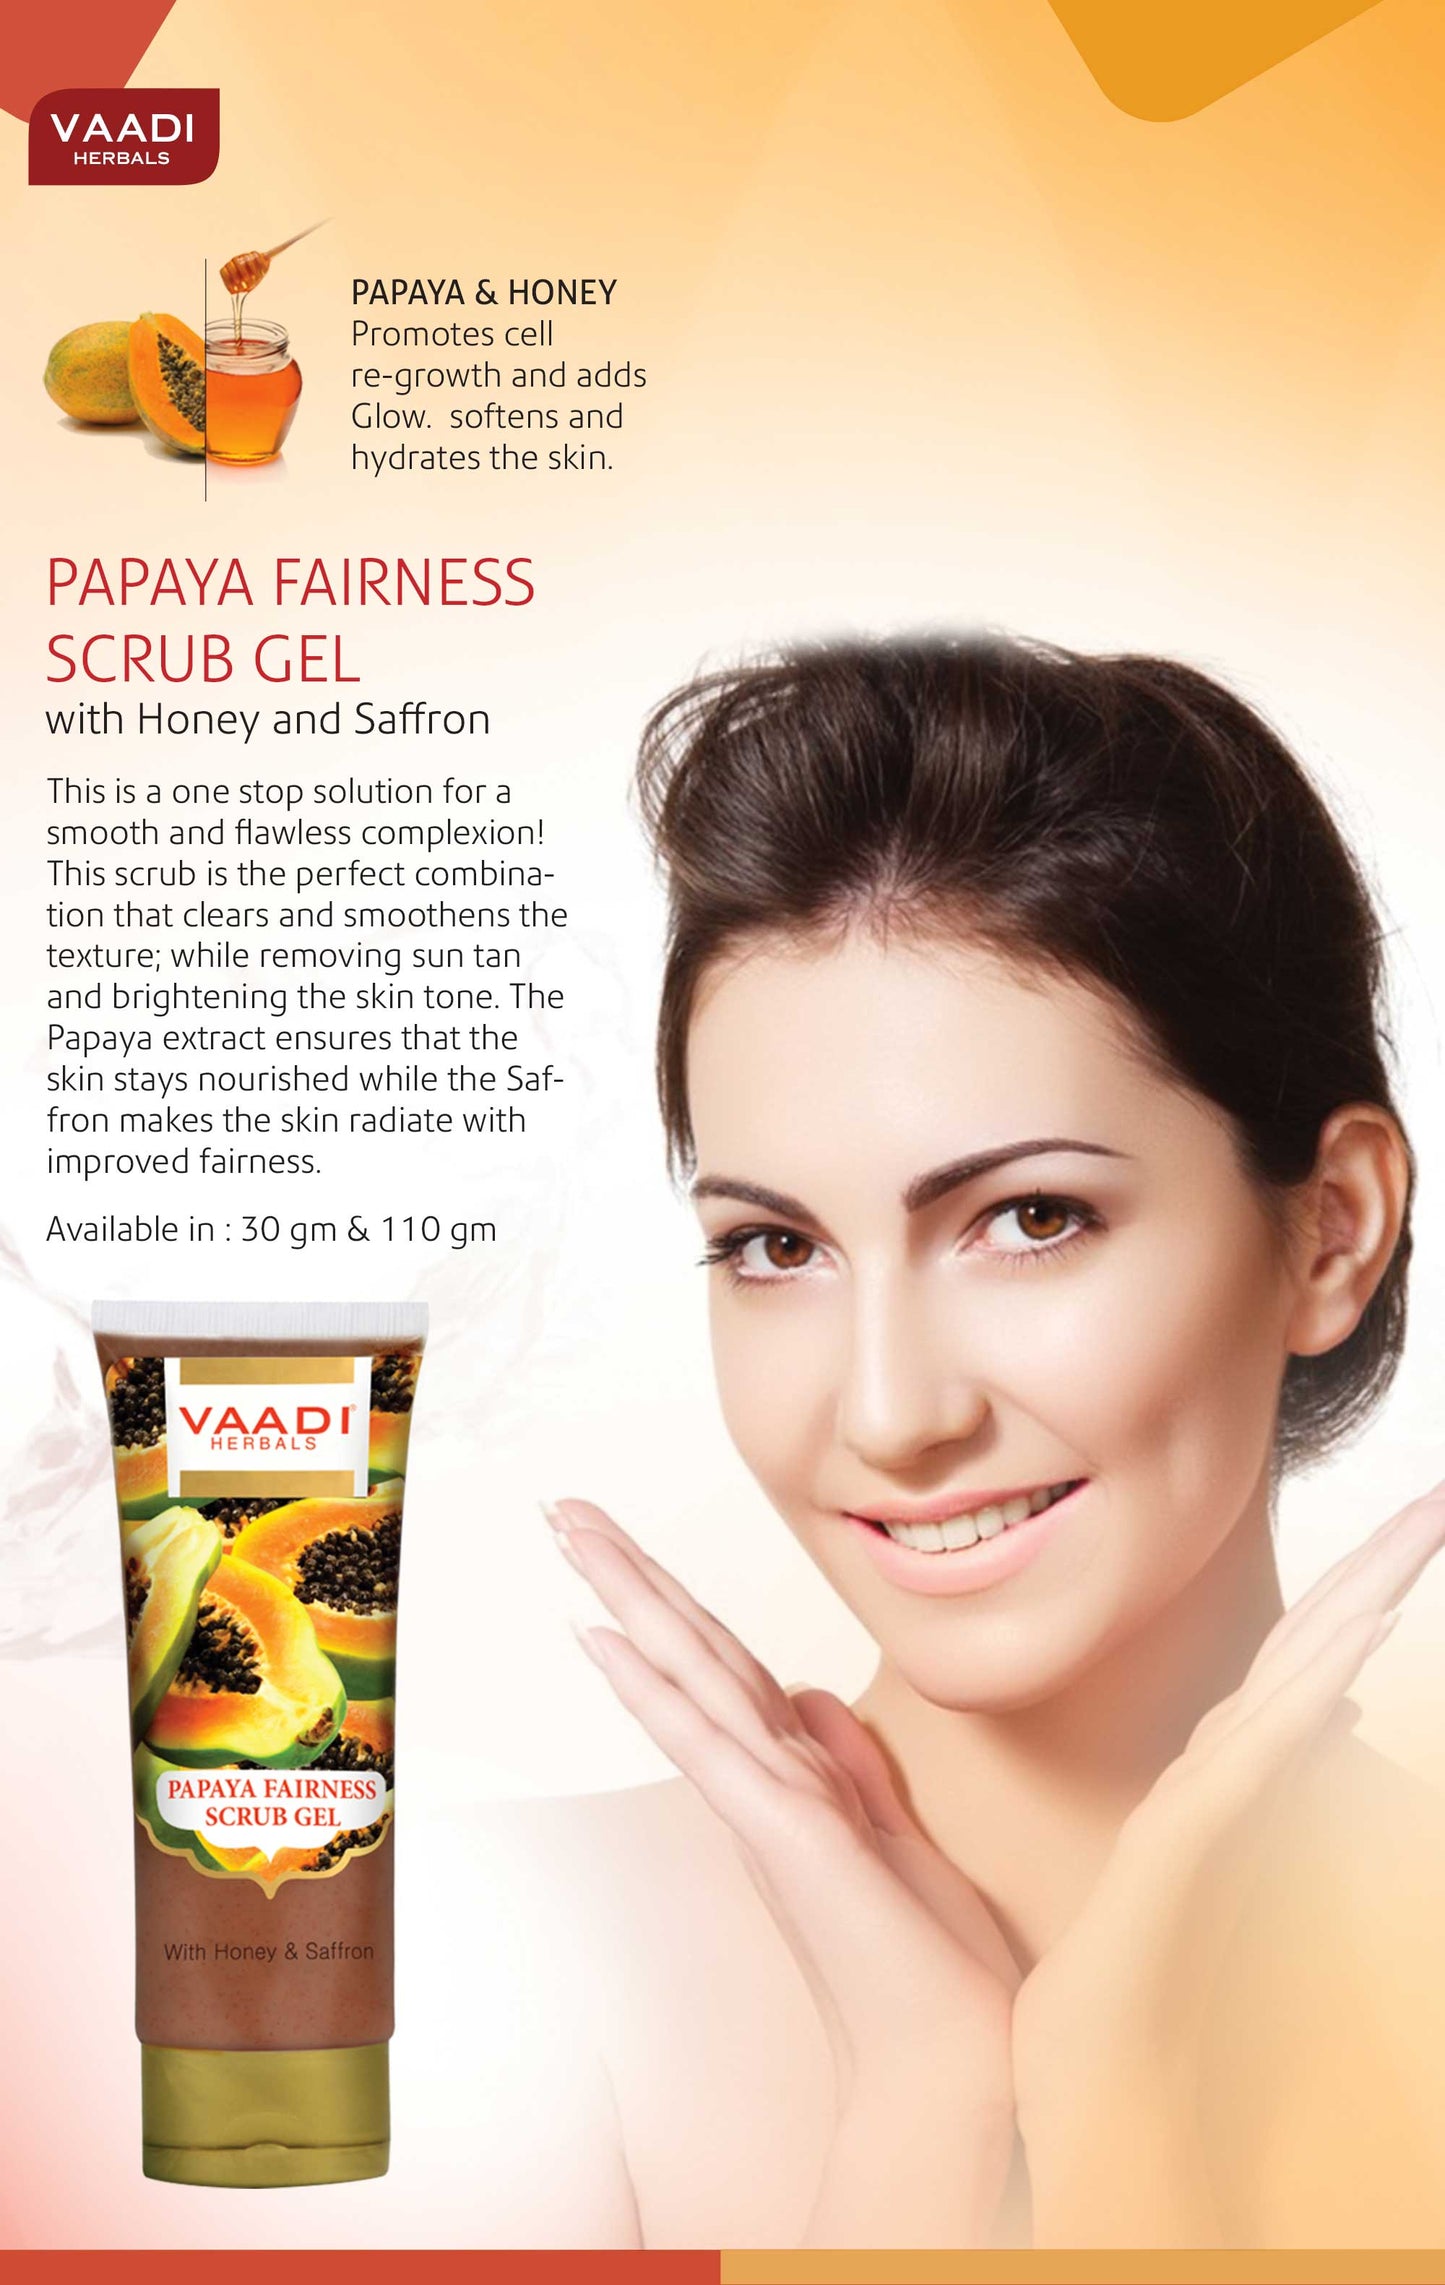 Organic Papaya Scrub Gel with Honey & Saffron - Reduces Tan - Smoothens Skin Texture - Makes Skin Flawless (110 gms / 4 oz)